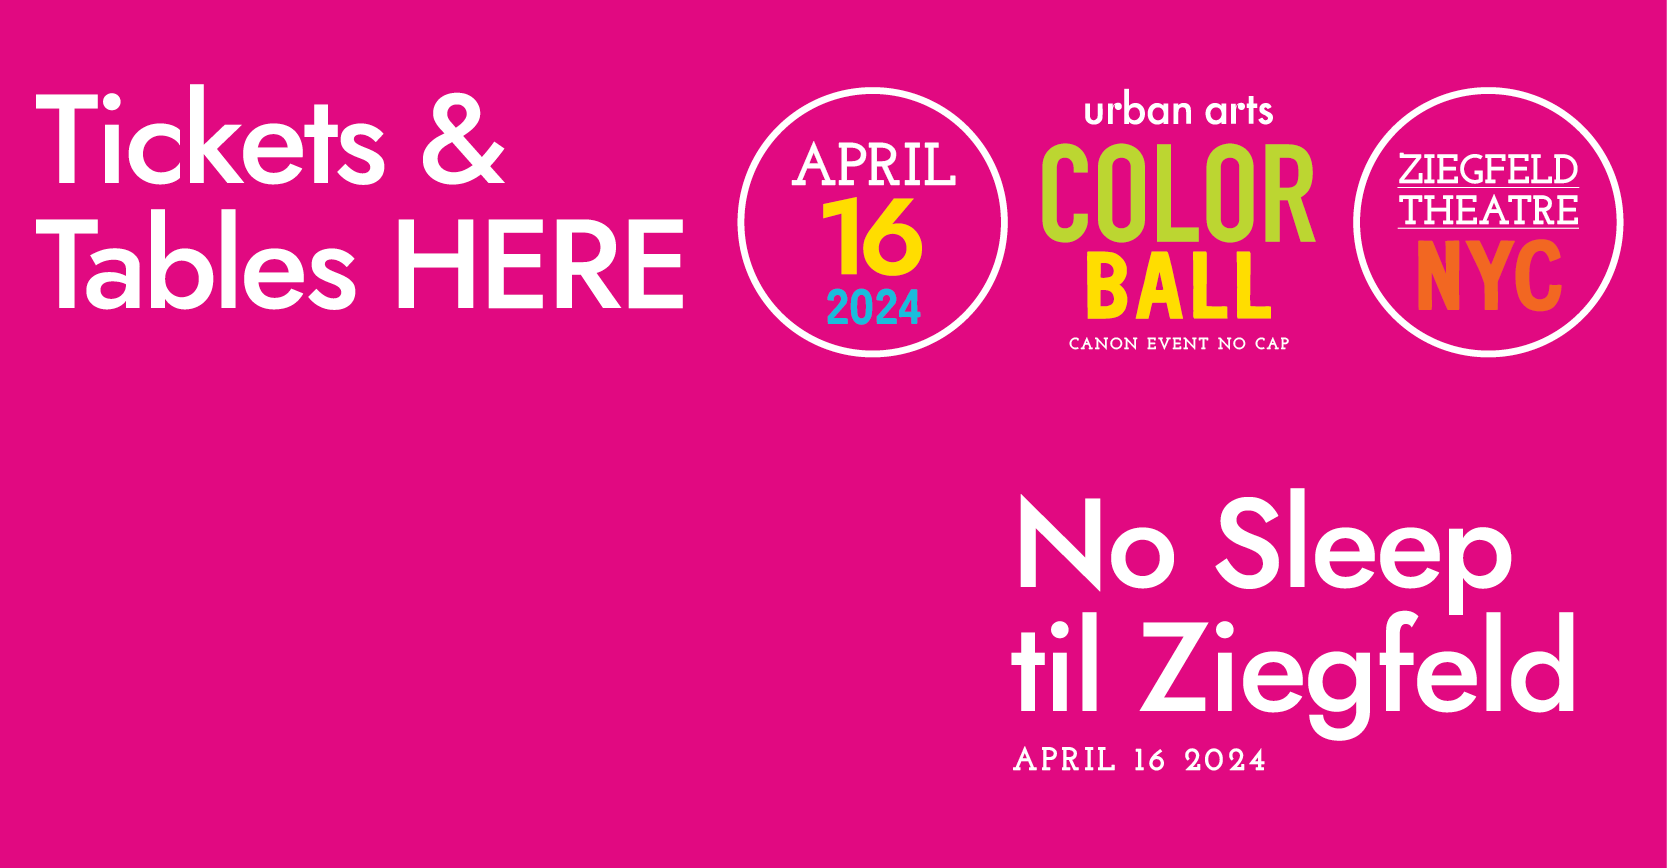 Color Ball April 16 2024